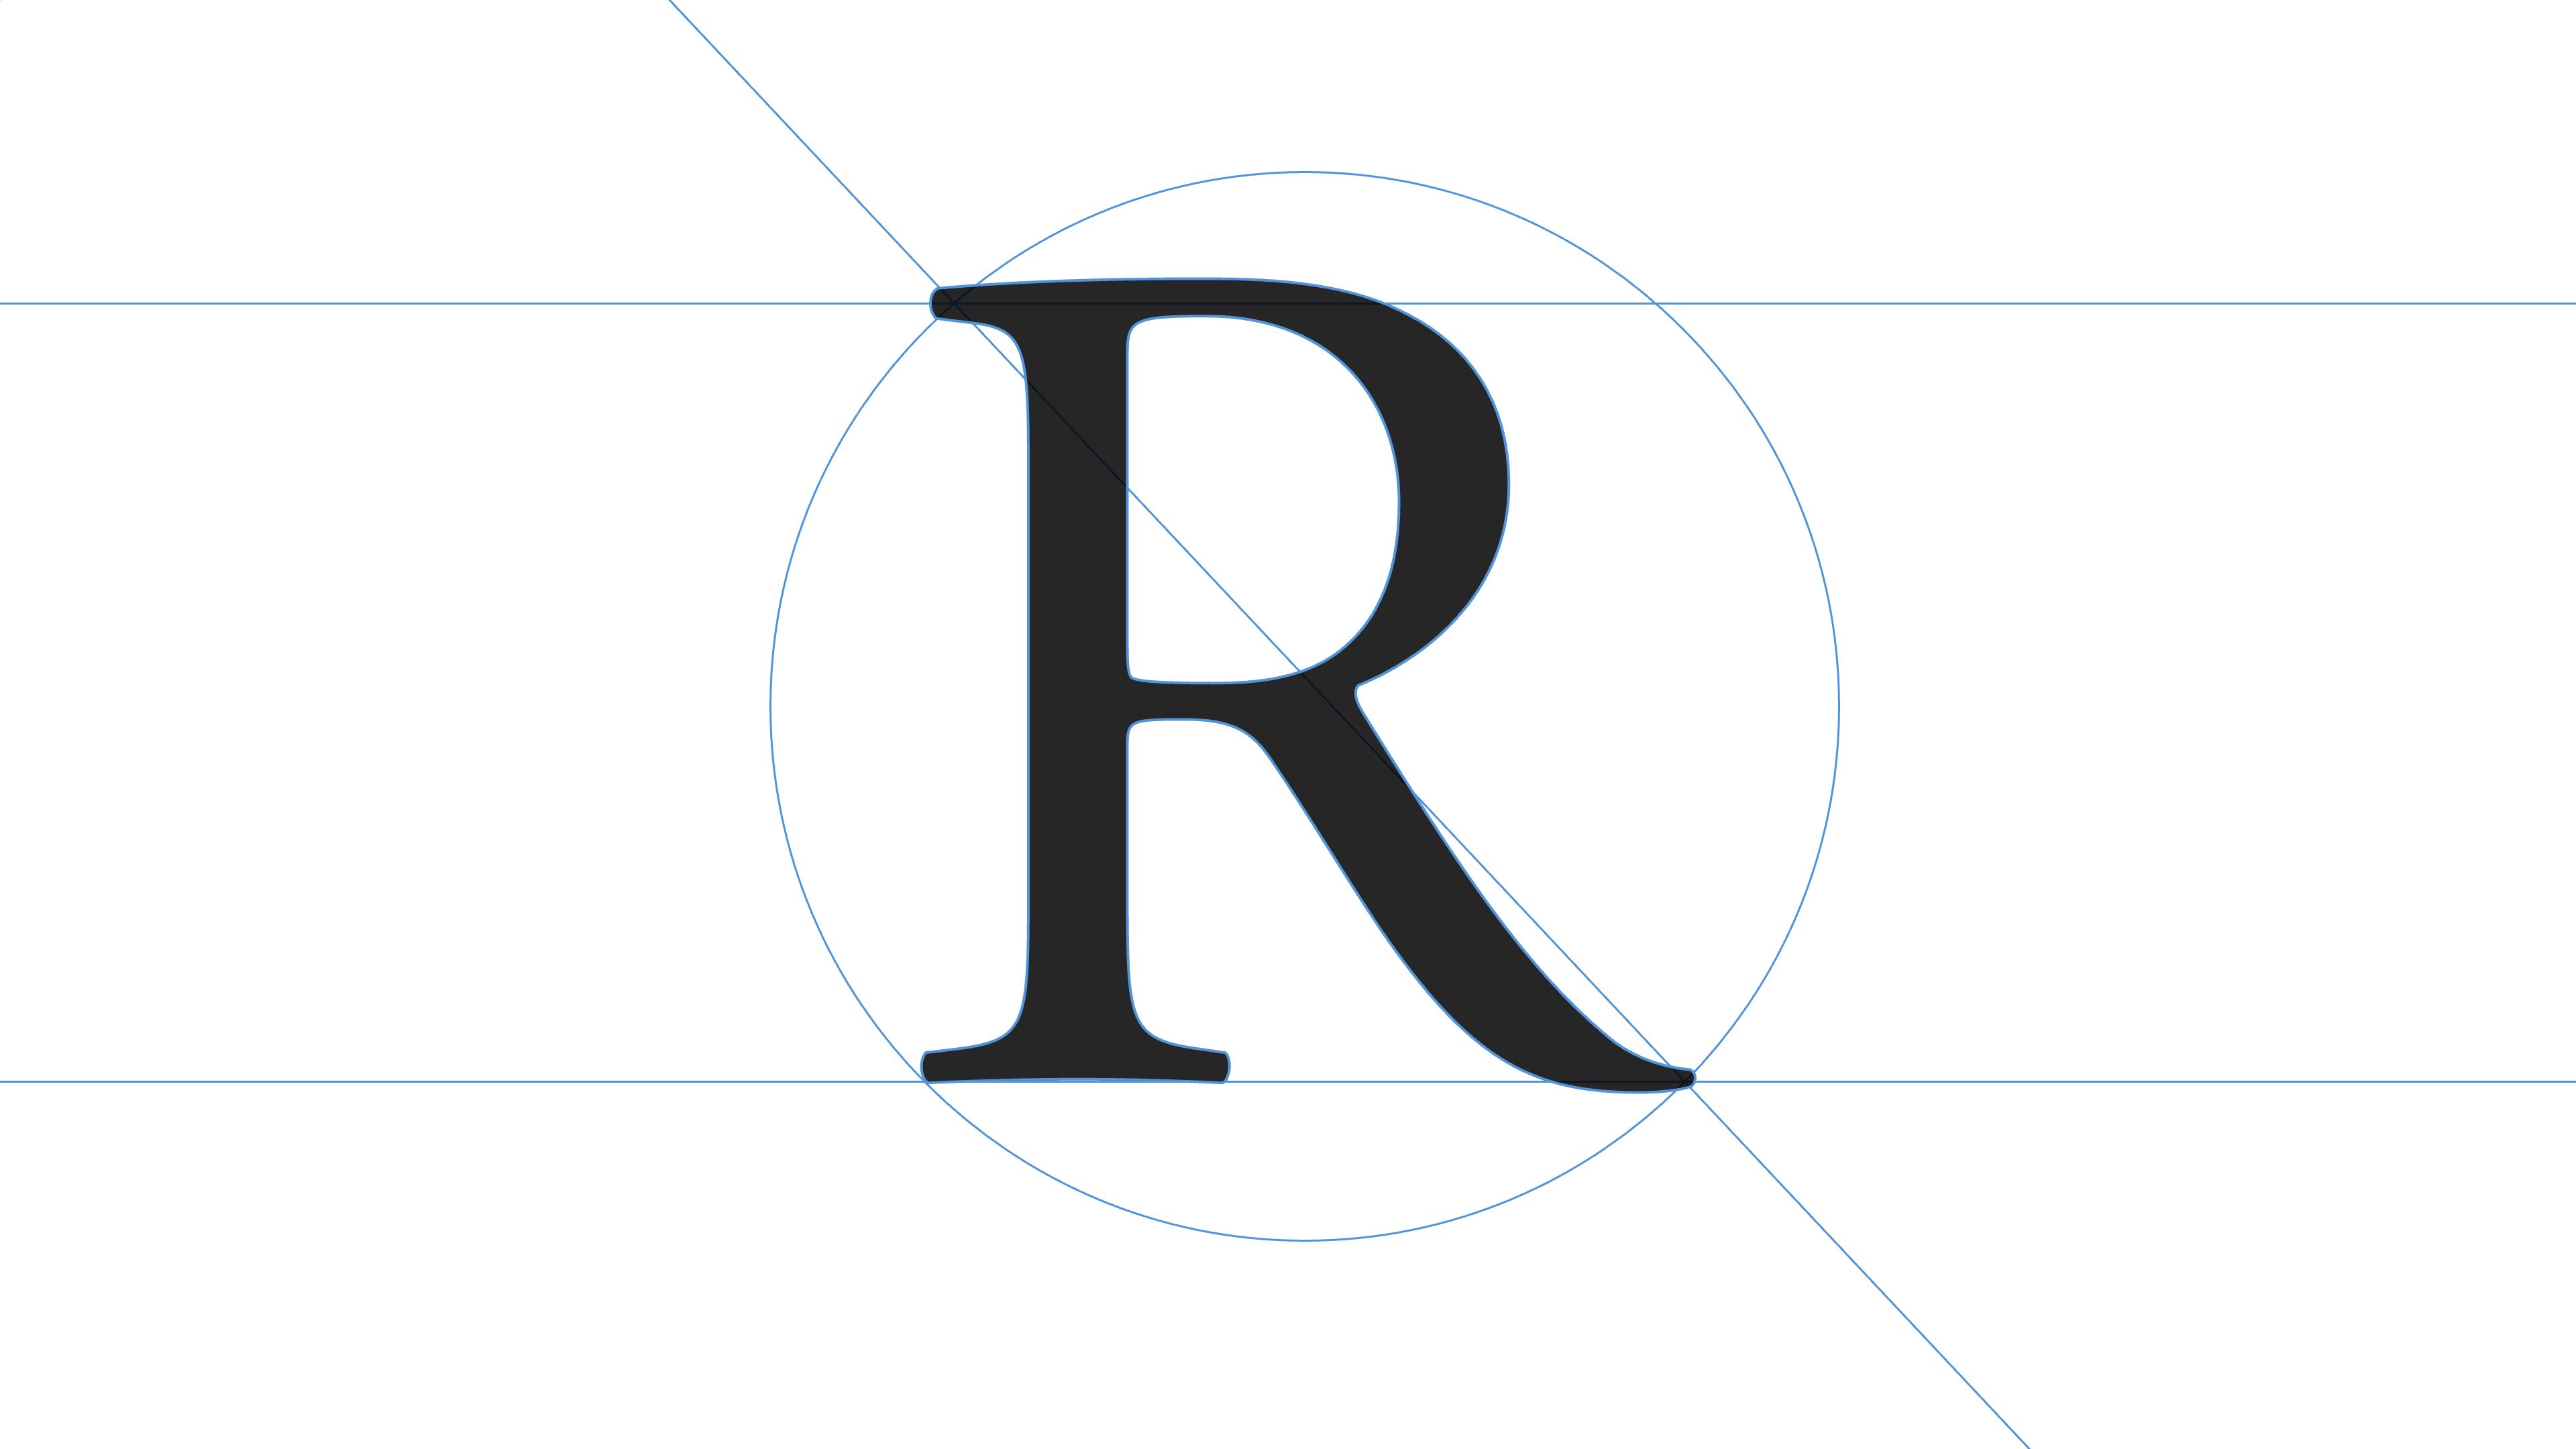 The character “R”, typeset in Adobe Garamond Pro